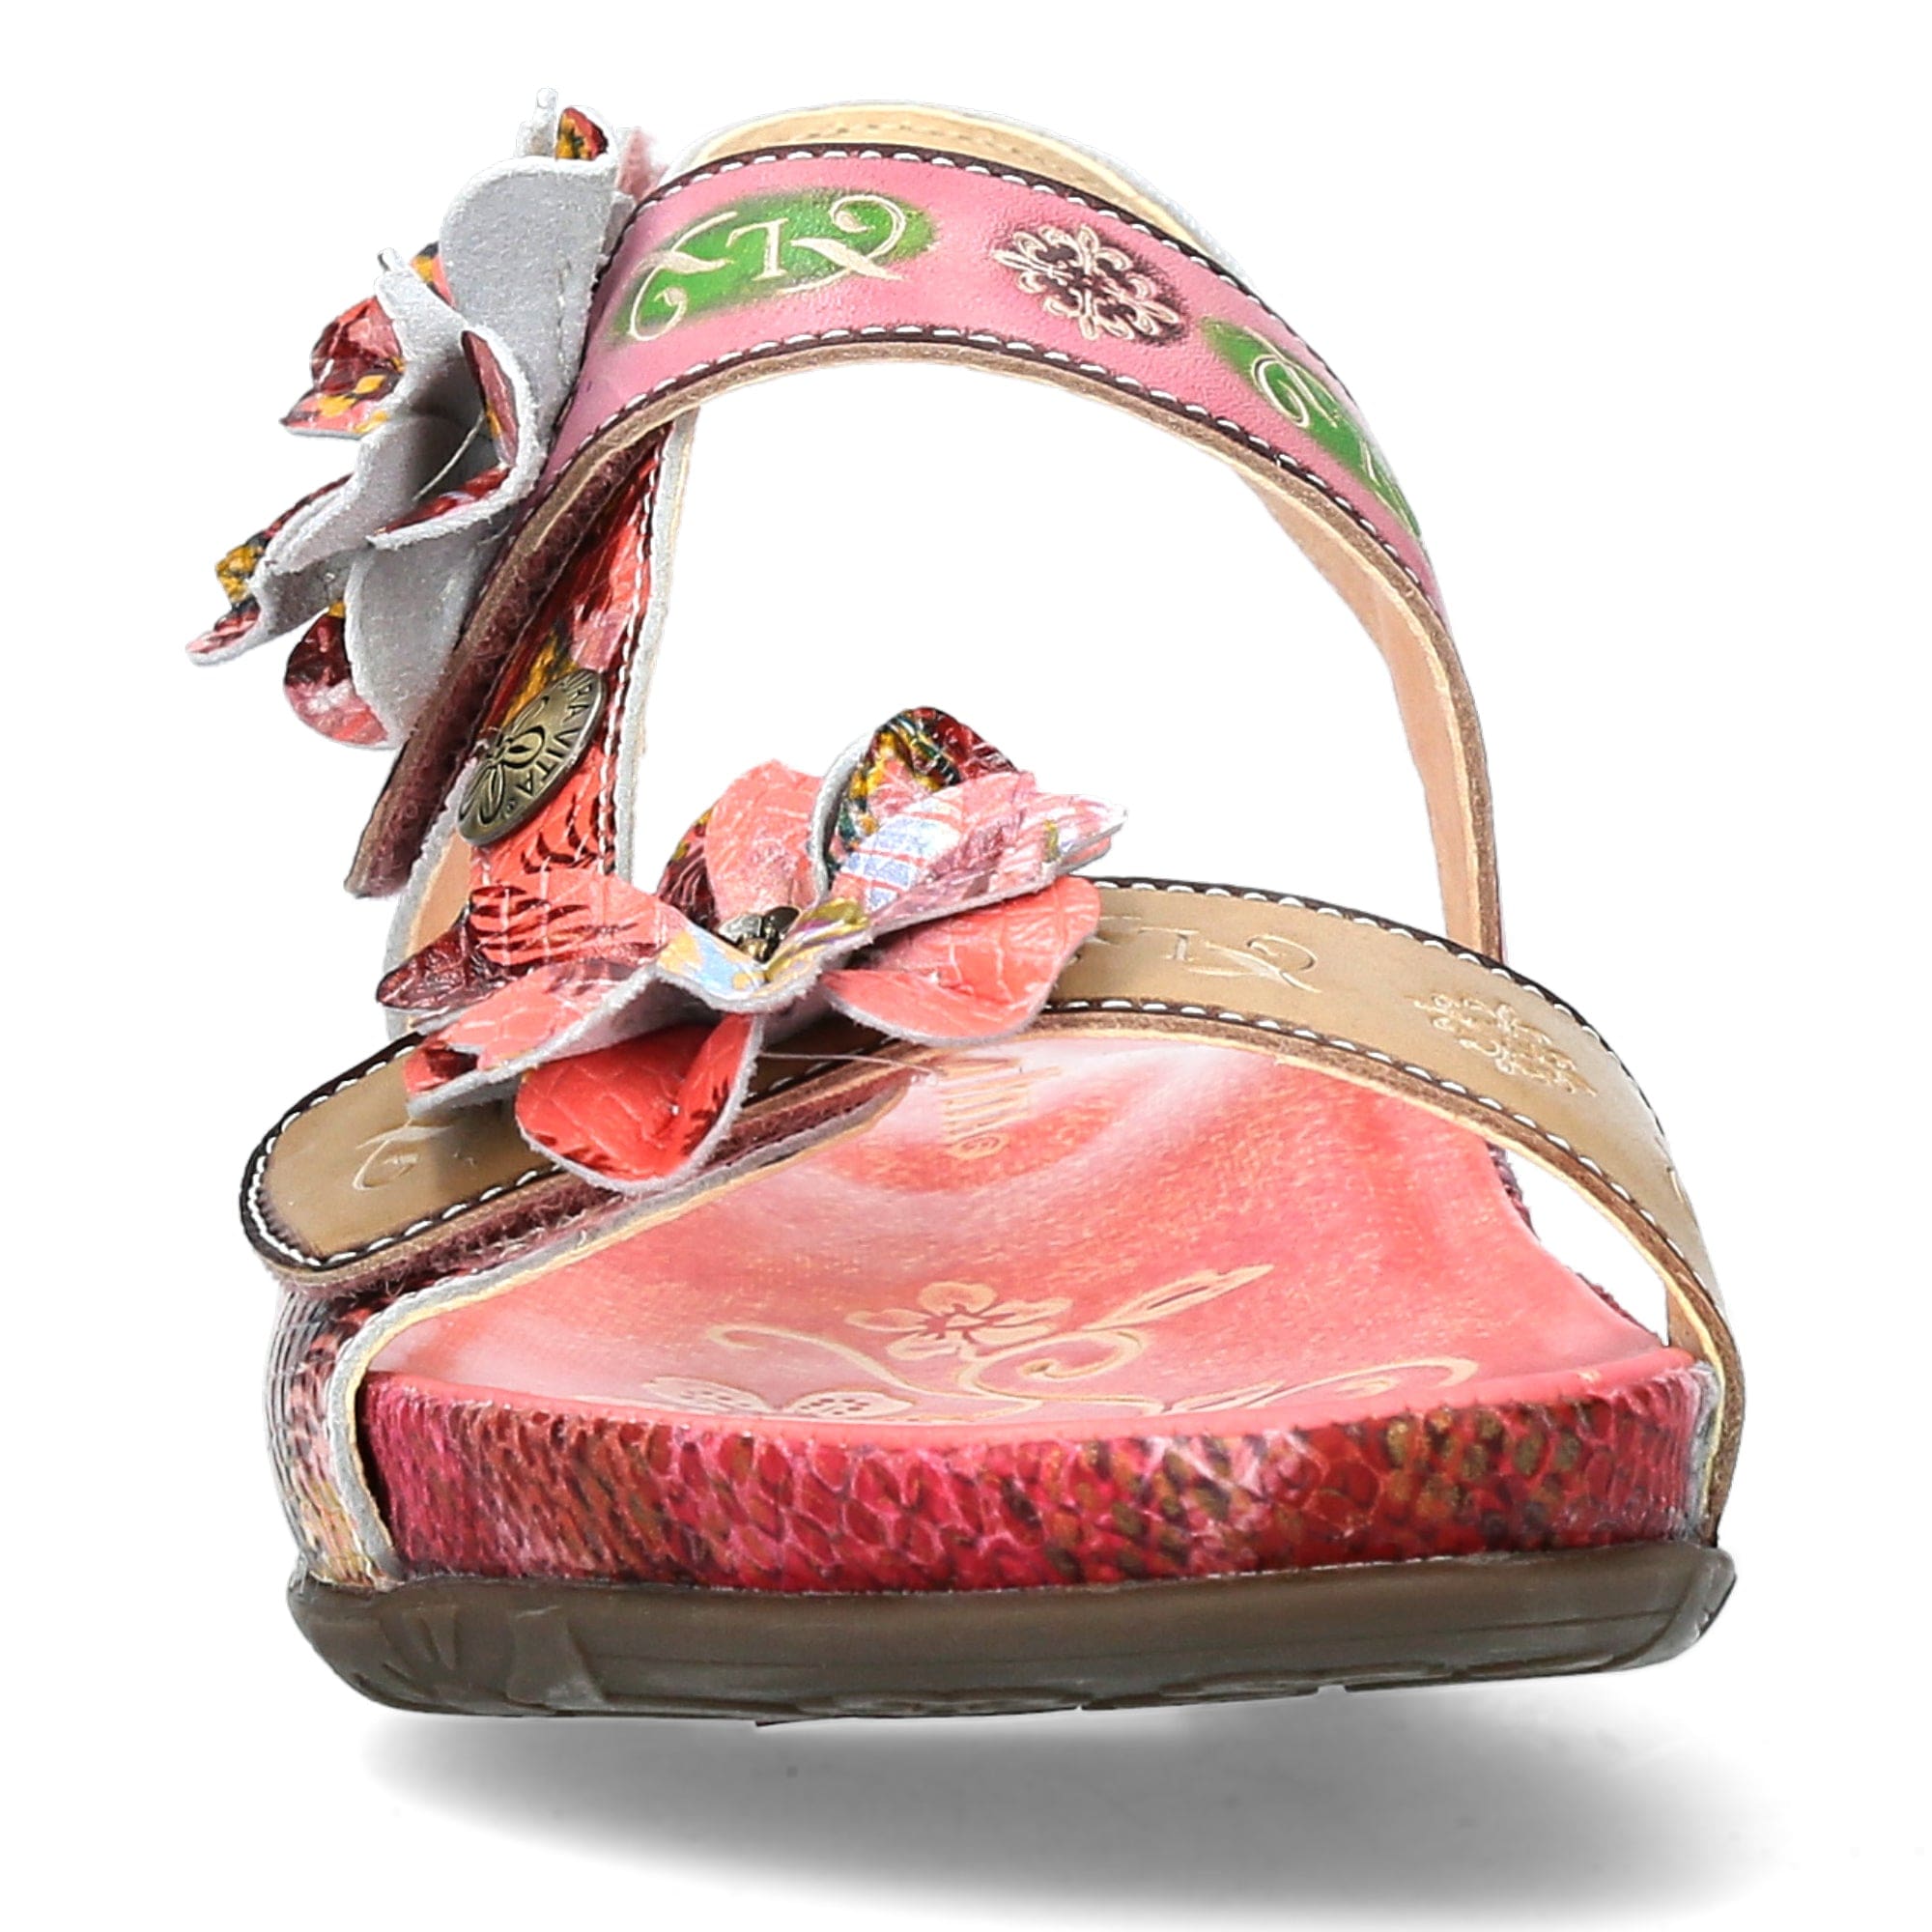 Chaussure LILOO 25 - Sandale